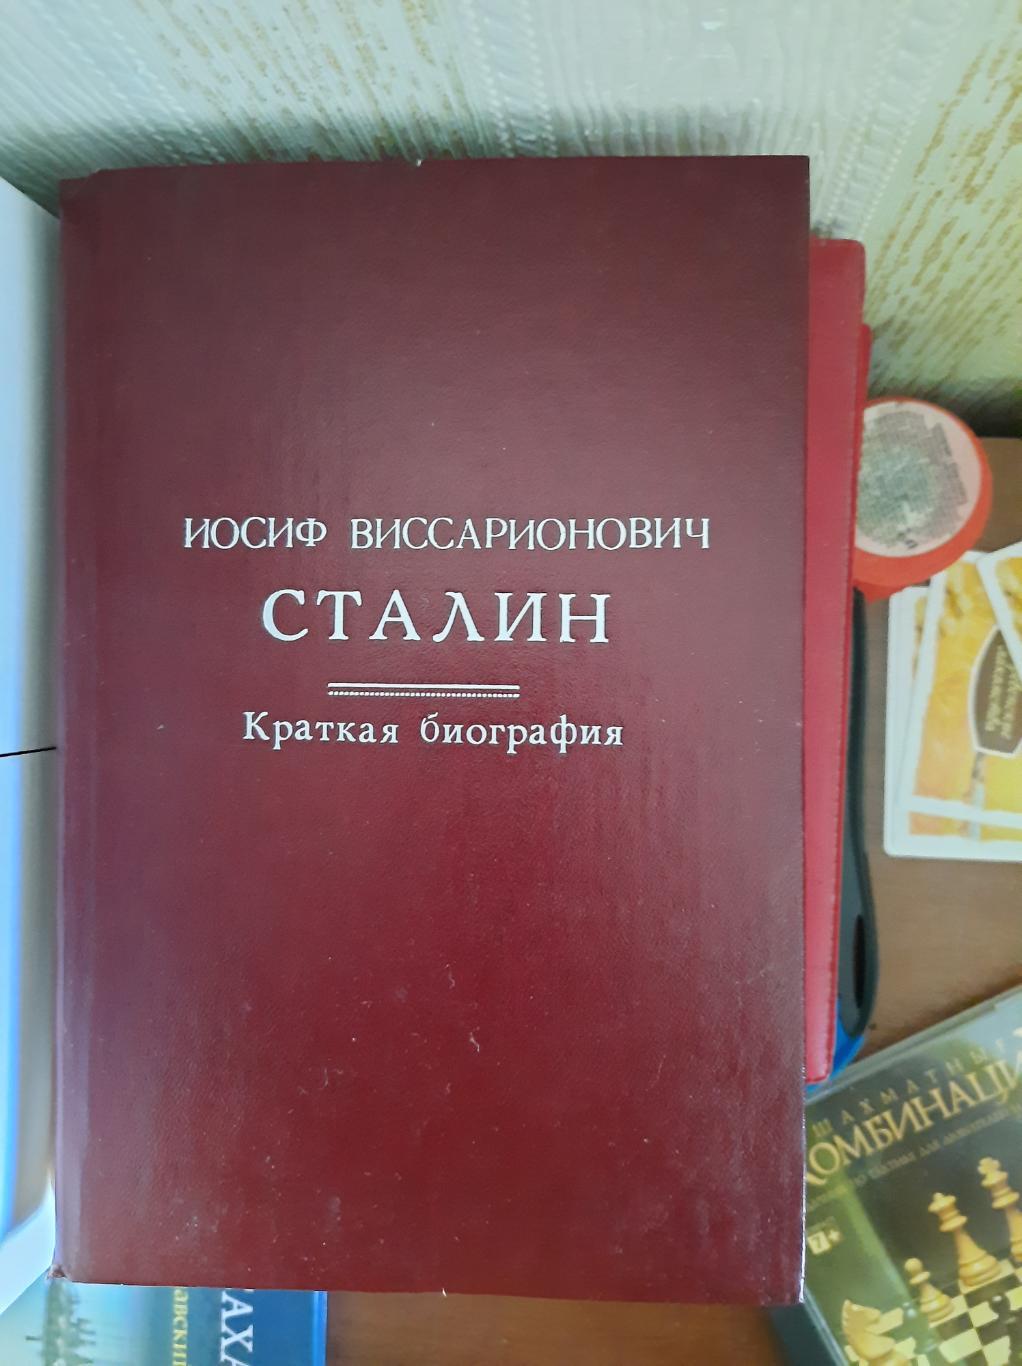 Иосиф Виссарионович Сталин. Краткая биография (Москва, 1993)